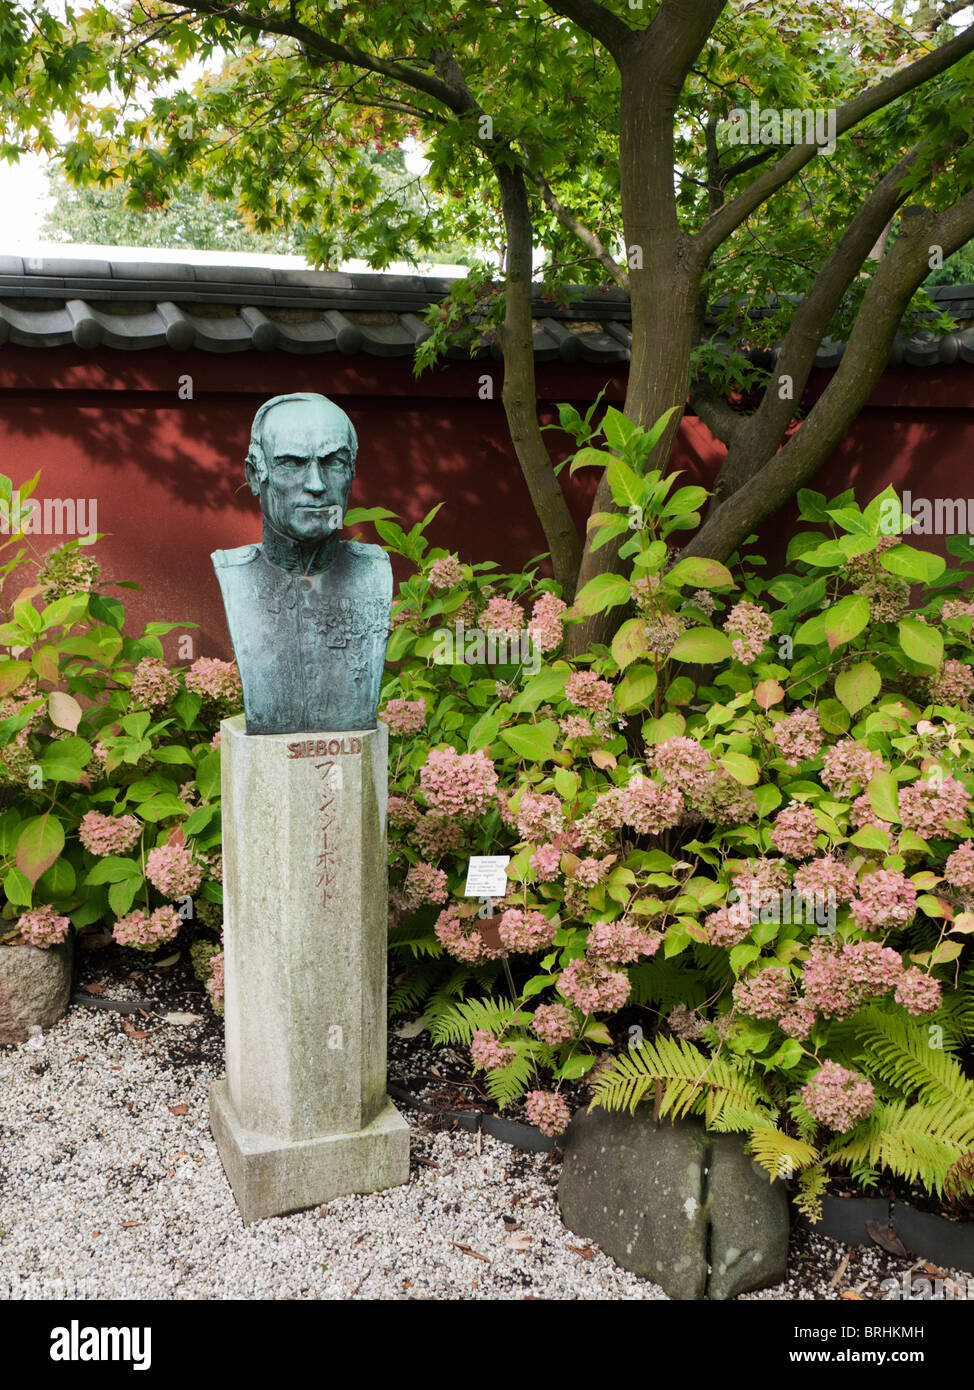 Busto in Von Siebold Memorial Garden di Hortus Botanicus Leiden nei Paesi Bassi Foto Stock